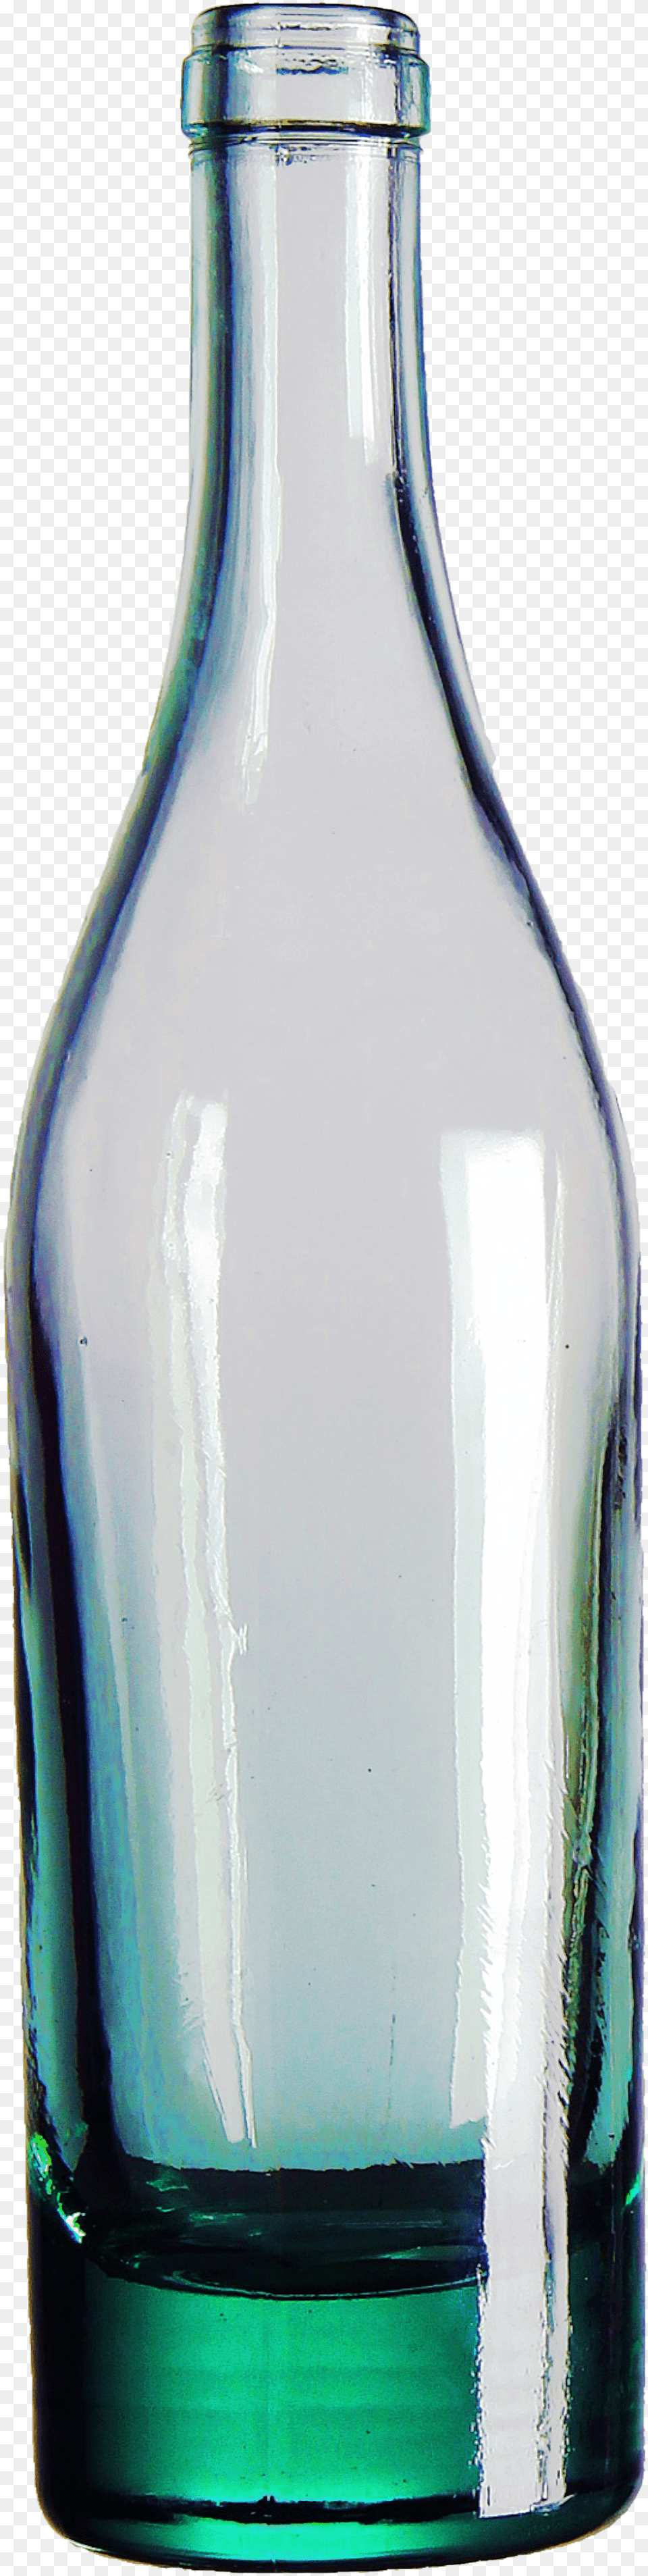 Clear Glass Bottle Glass Bottle Reflection, Jar, Pottery, Vase, Alcohol Free Png Download